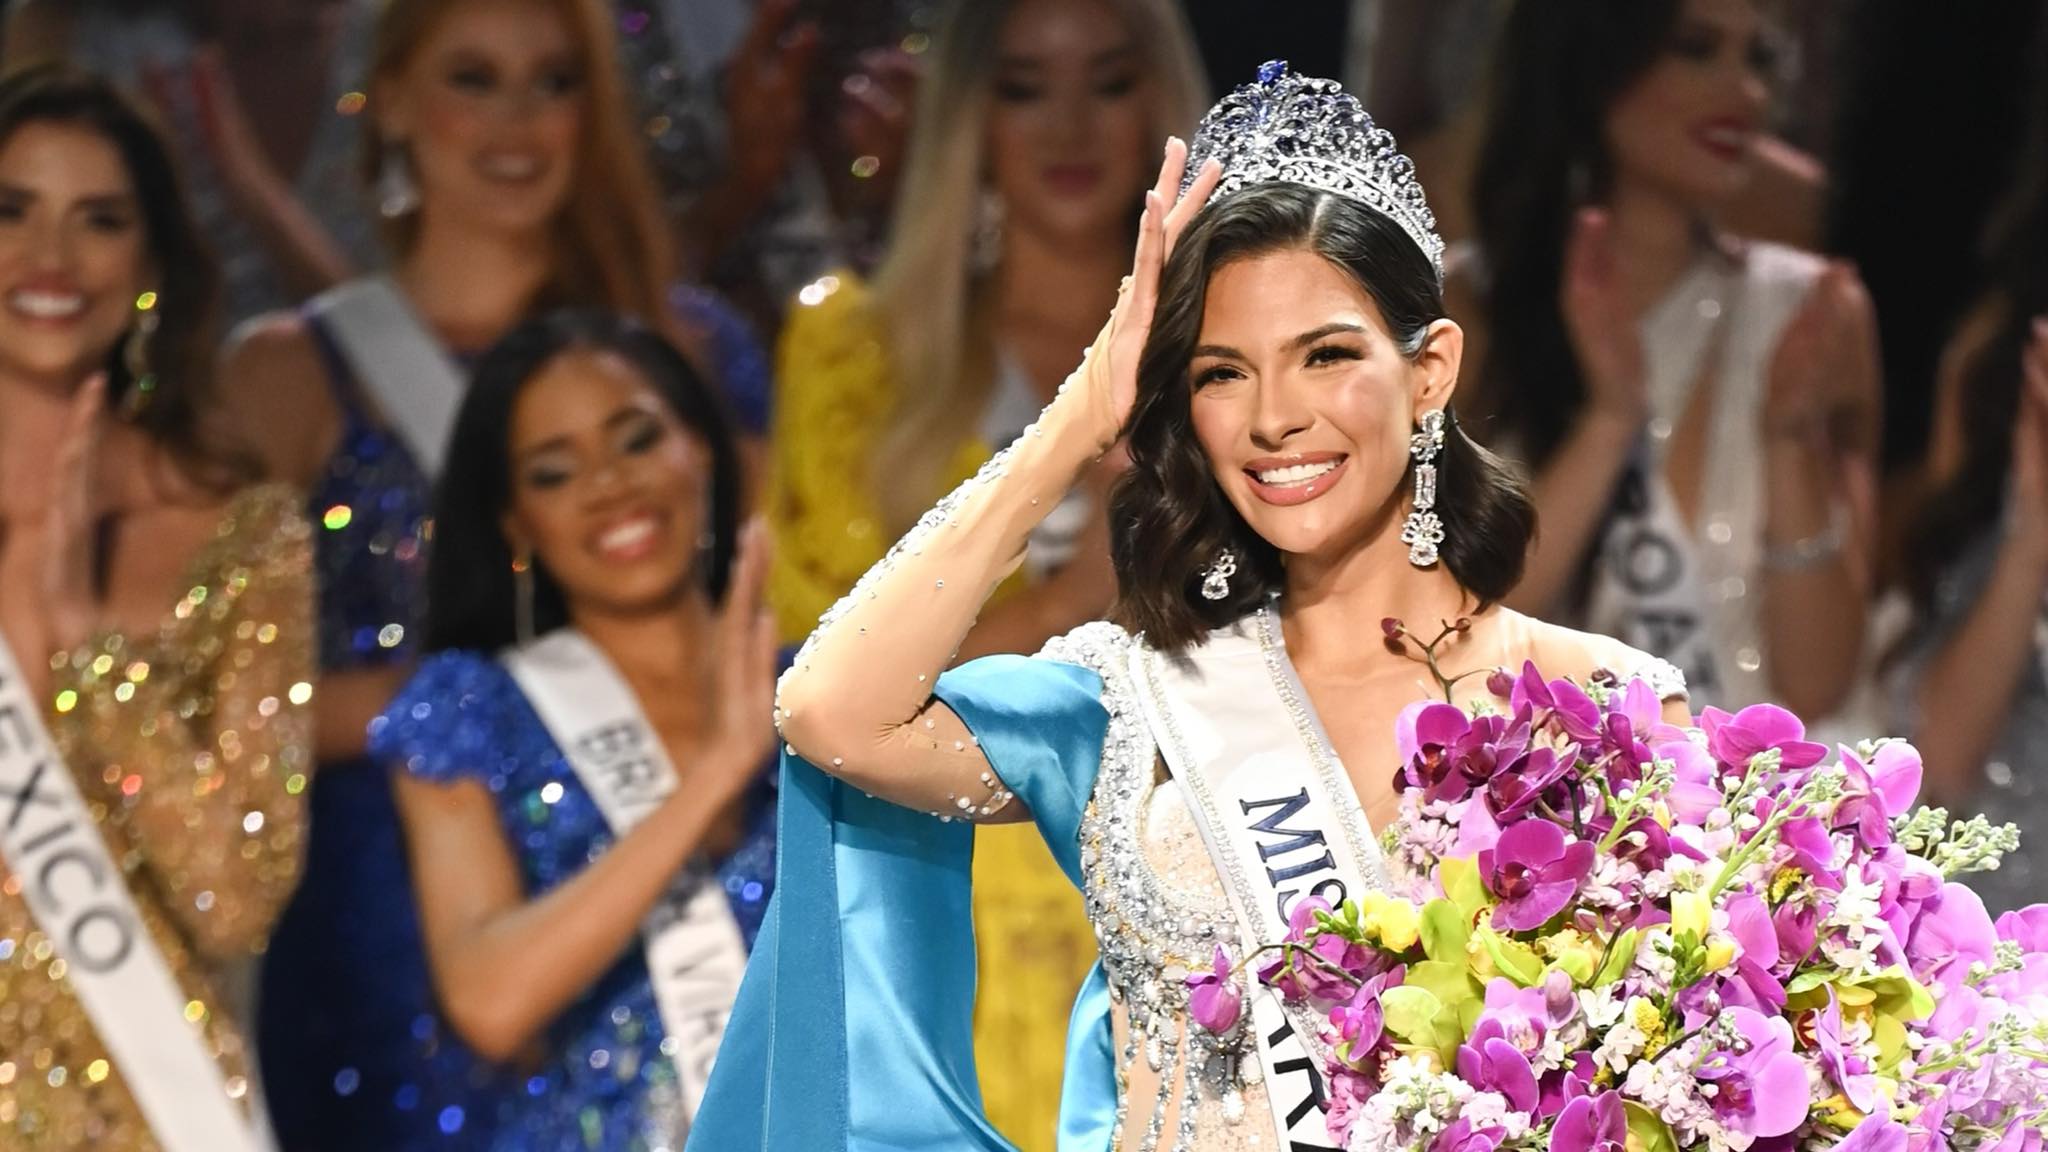 Sheynnis Palacios of Nicaragua is Miss Universe 2023